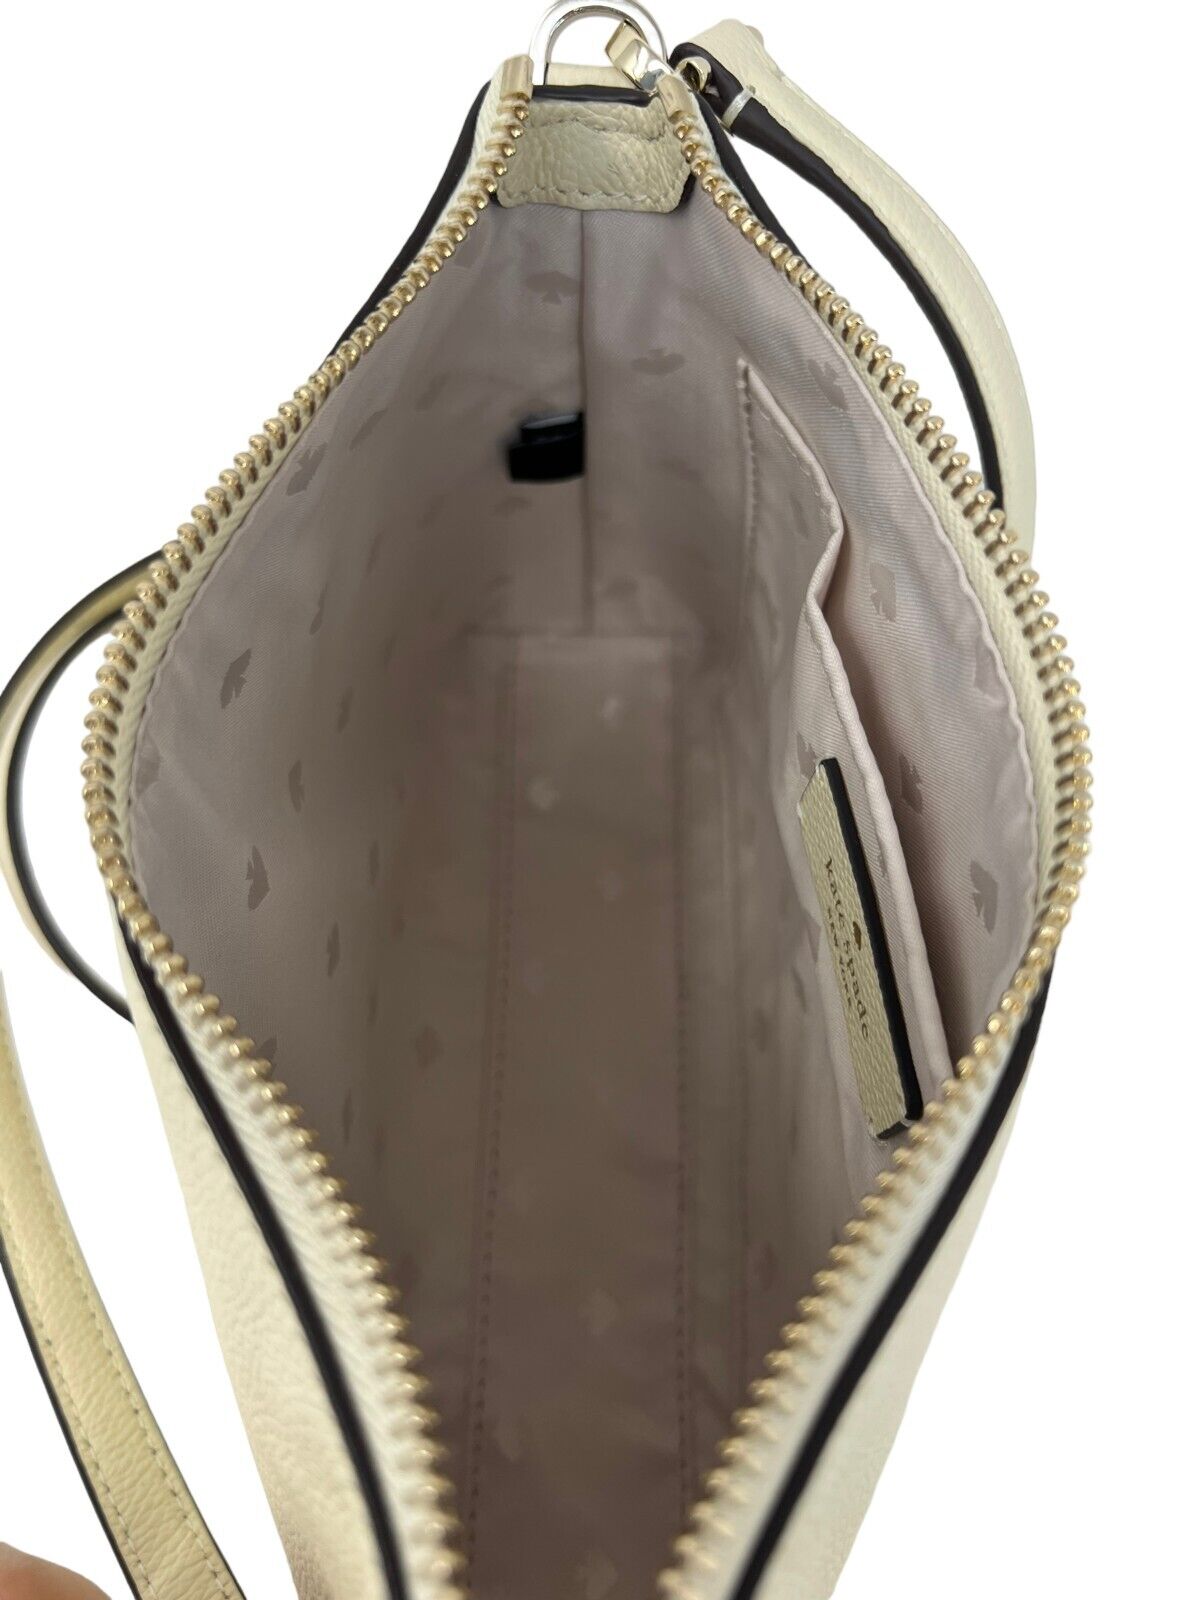 Kate Spade Bailey Pebble Leather Crossbody Bag Buttermilk K4651 $299 –  LuxyVIP